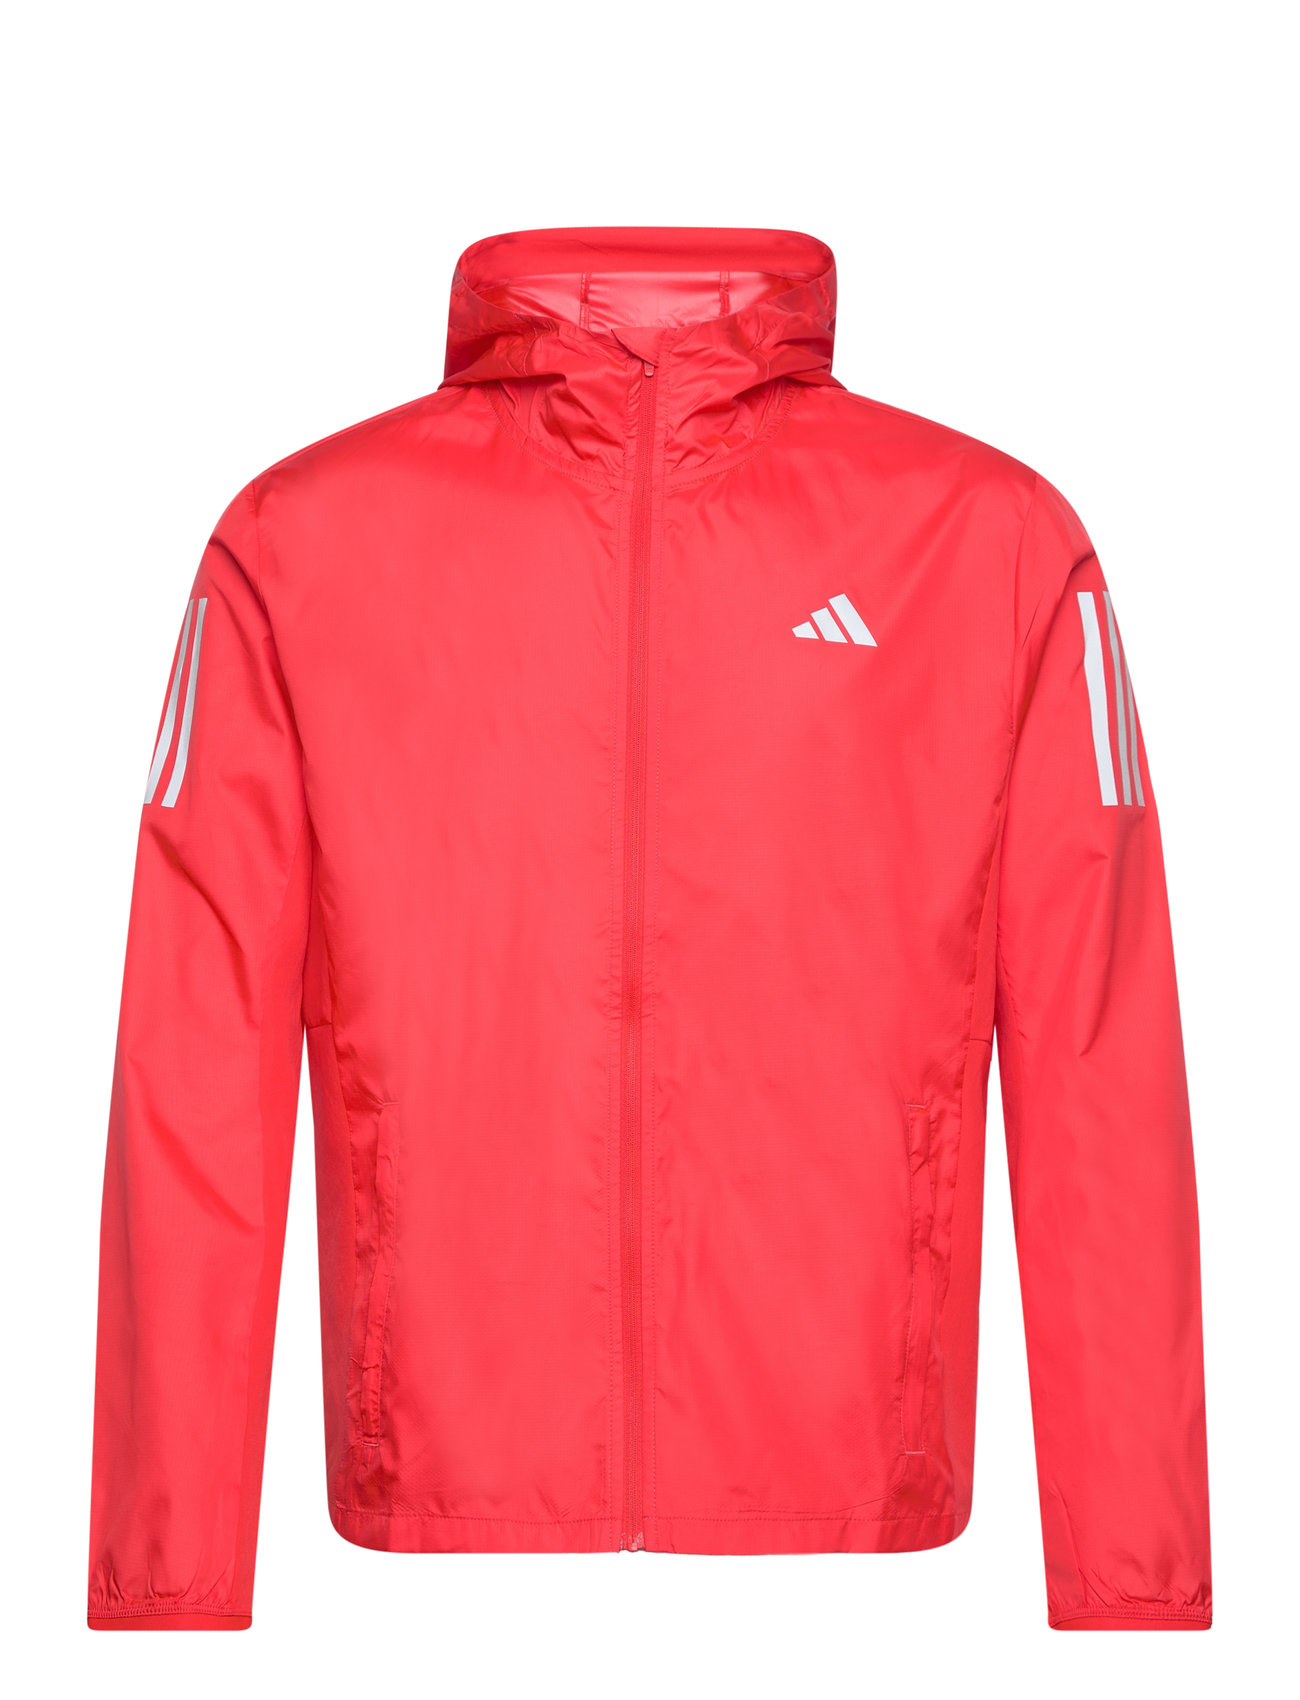 Otr Jacket M Sport Sport Jackets Red Adidas Performance